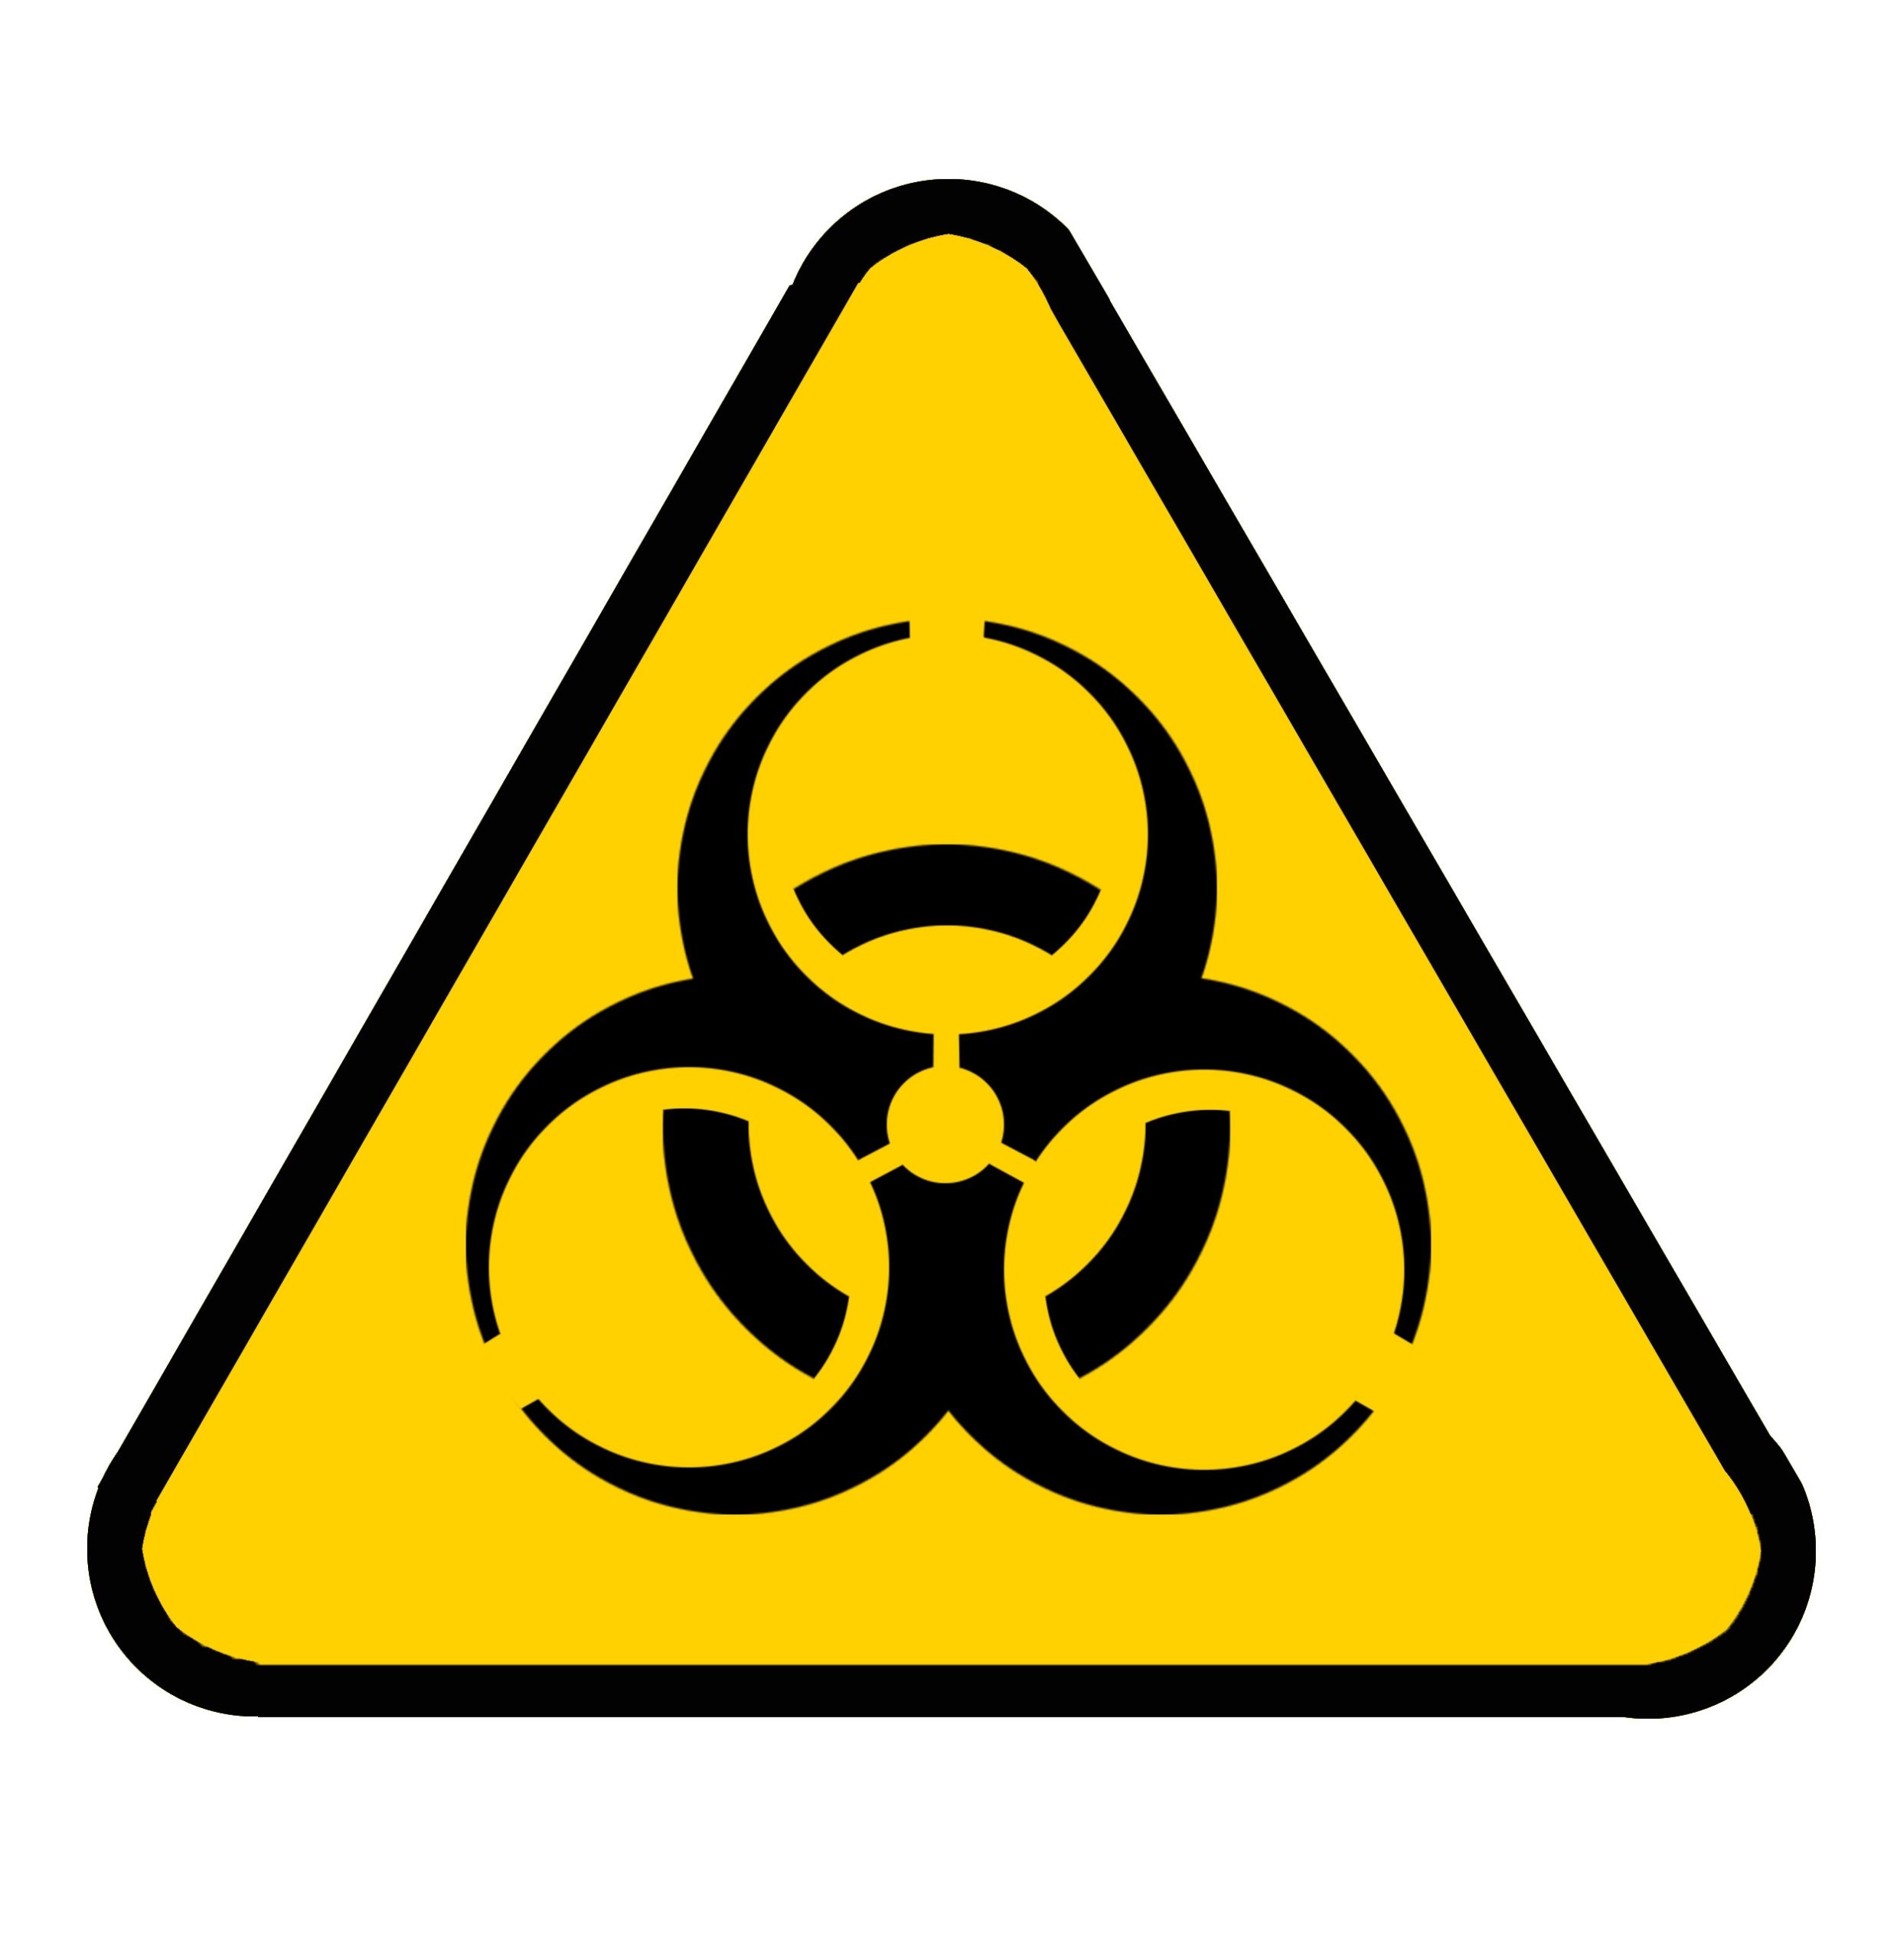 biohazard warning symbol on yellow black triangle caution sign, virus infection warning sign